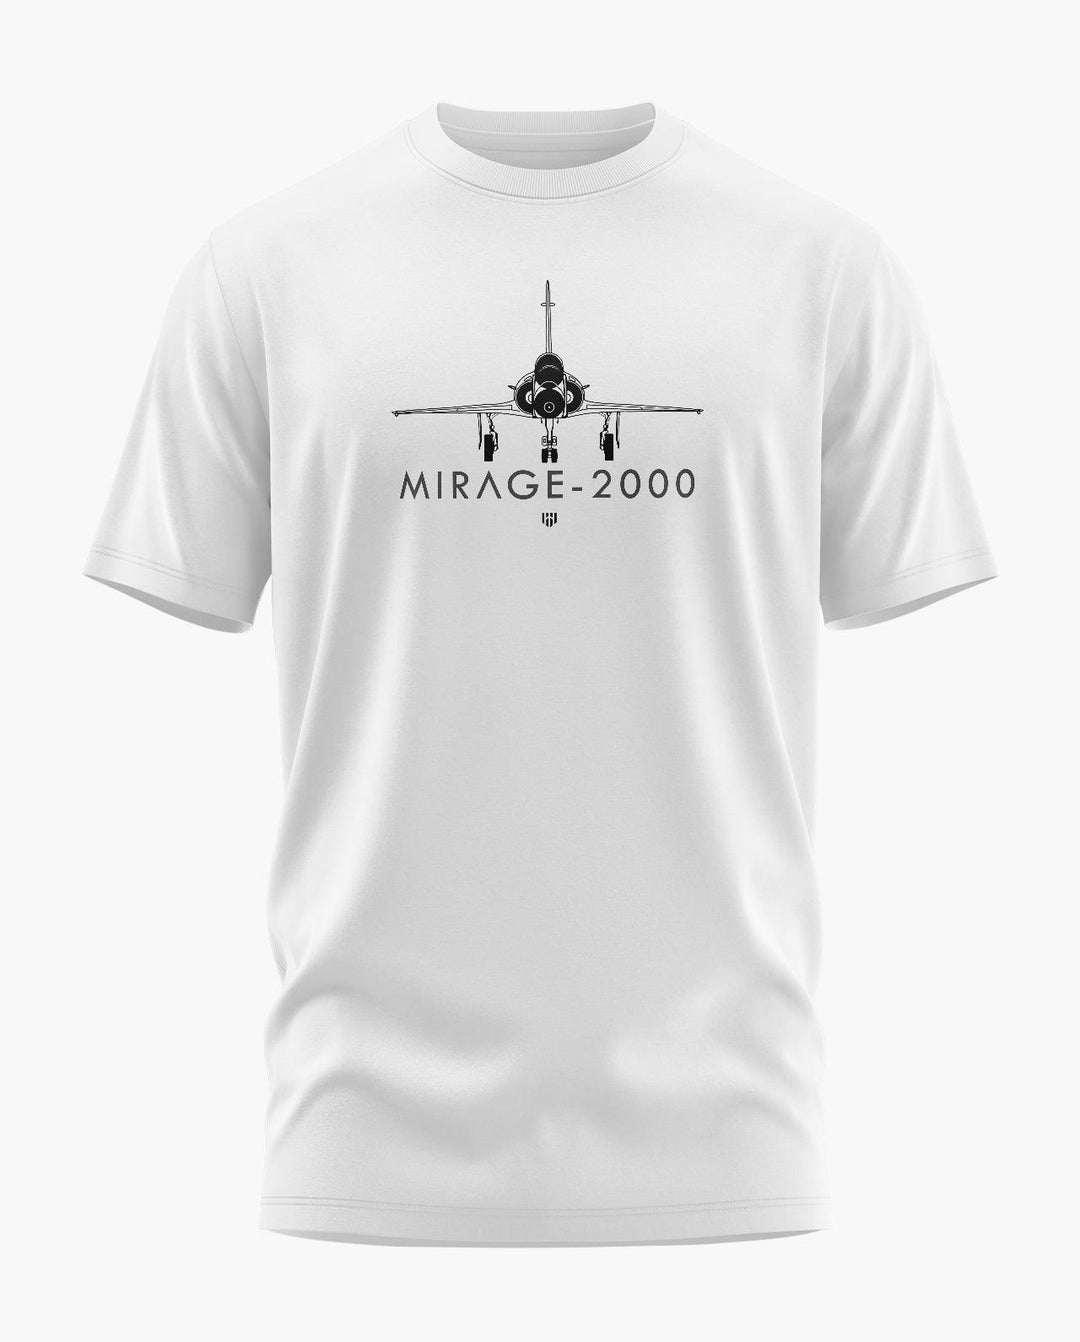 MIRAGE-2000 FRONT VIEW T-Shirt - Aero Armour